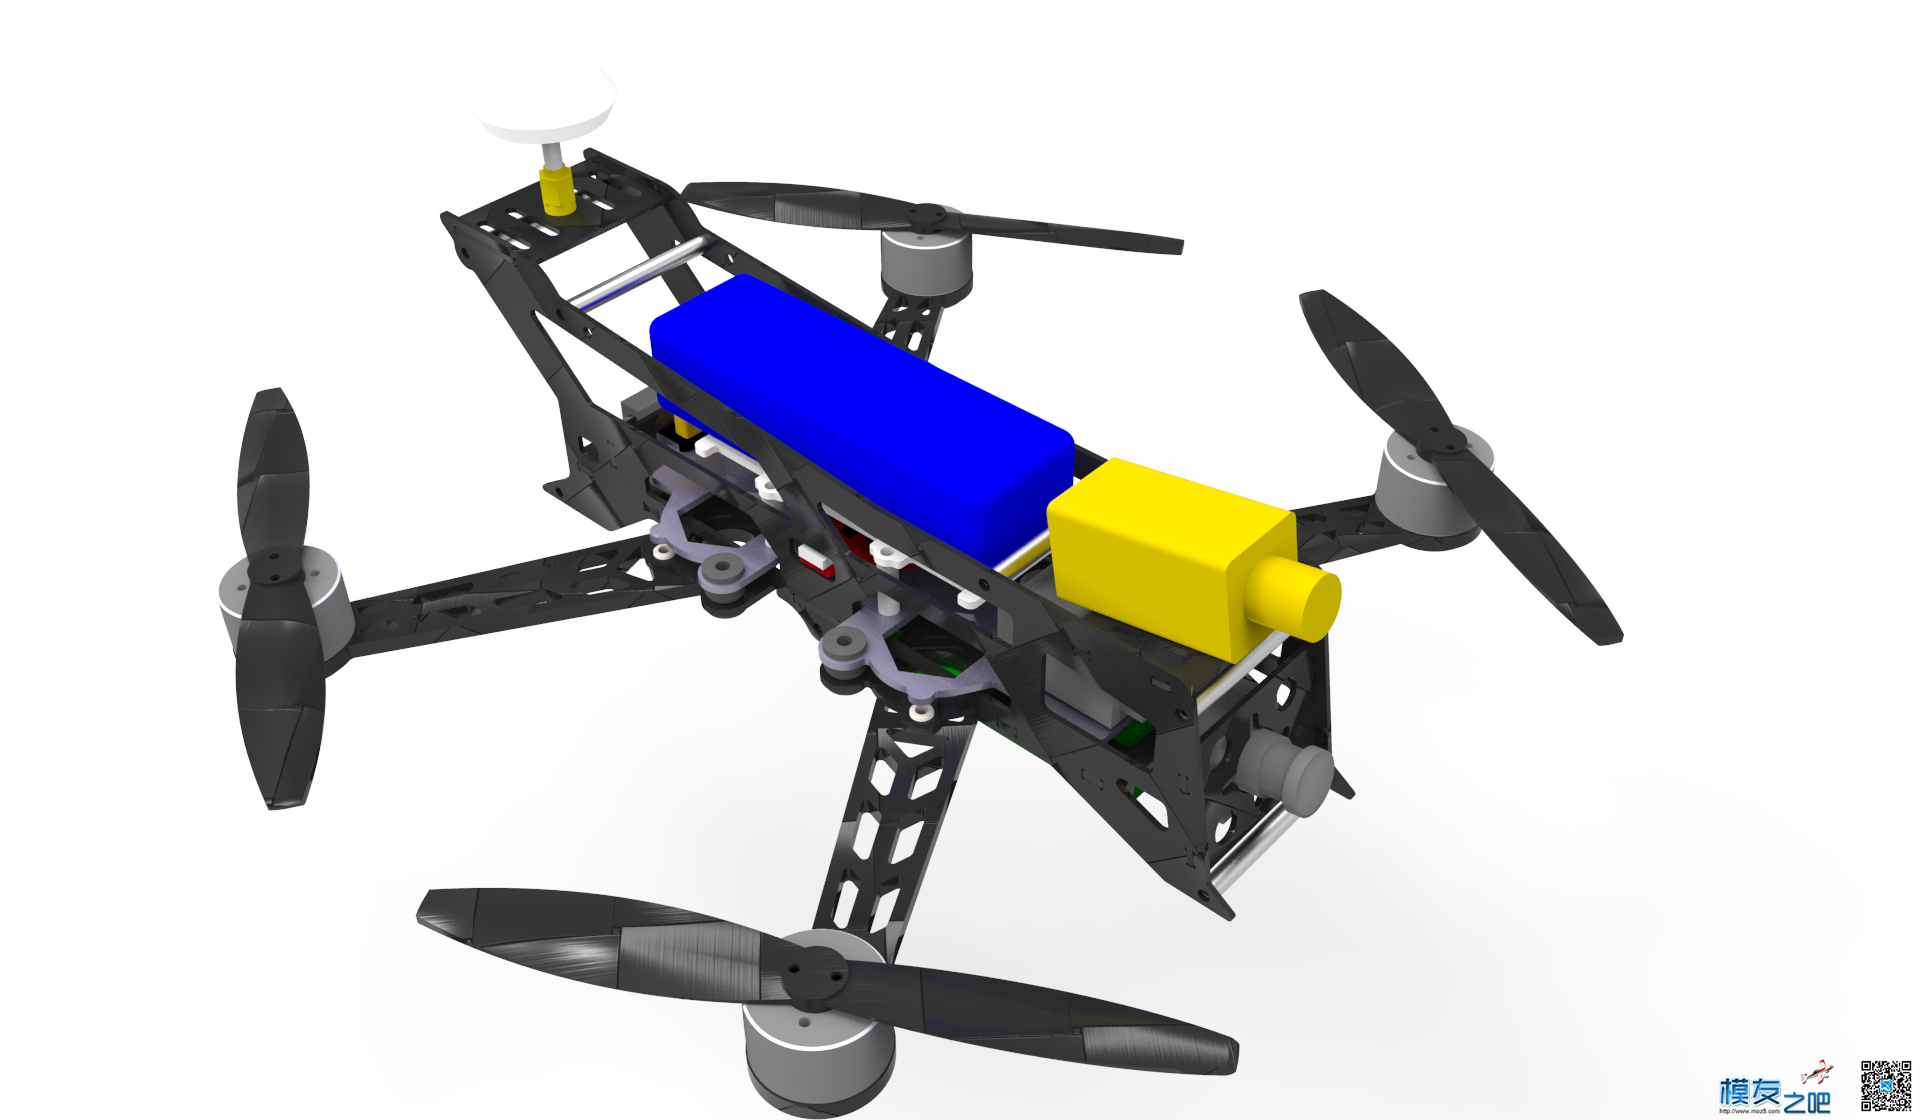 AlienCopter 穿越者V 新品首发 穿越机,多旋翼,电池,天线,图传 作者:xiaoxuexue11111 466 